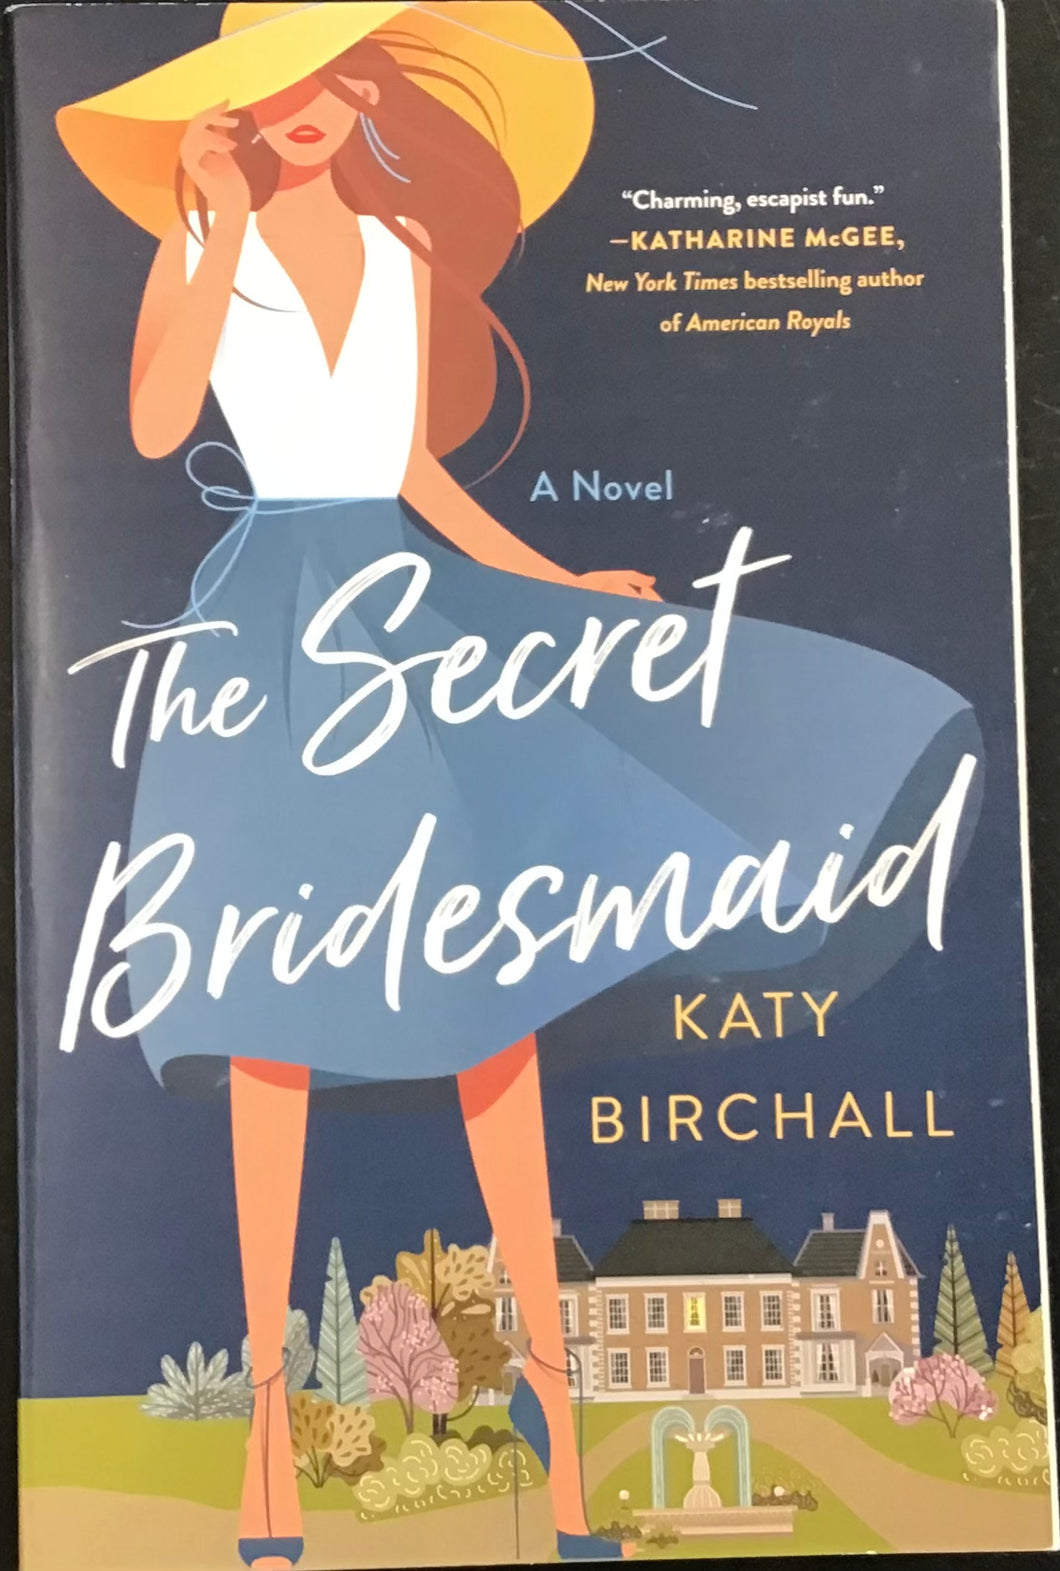 The Secret Bridesmaid, Katy Birchall